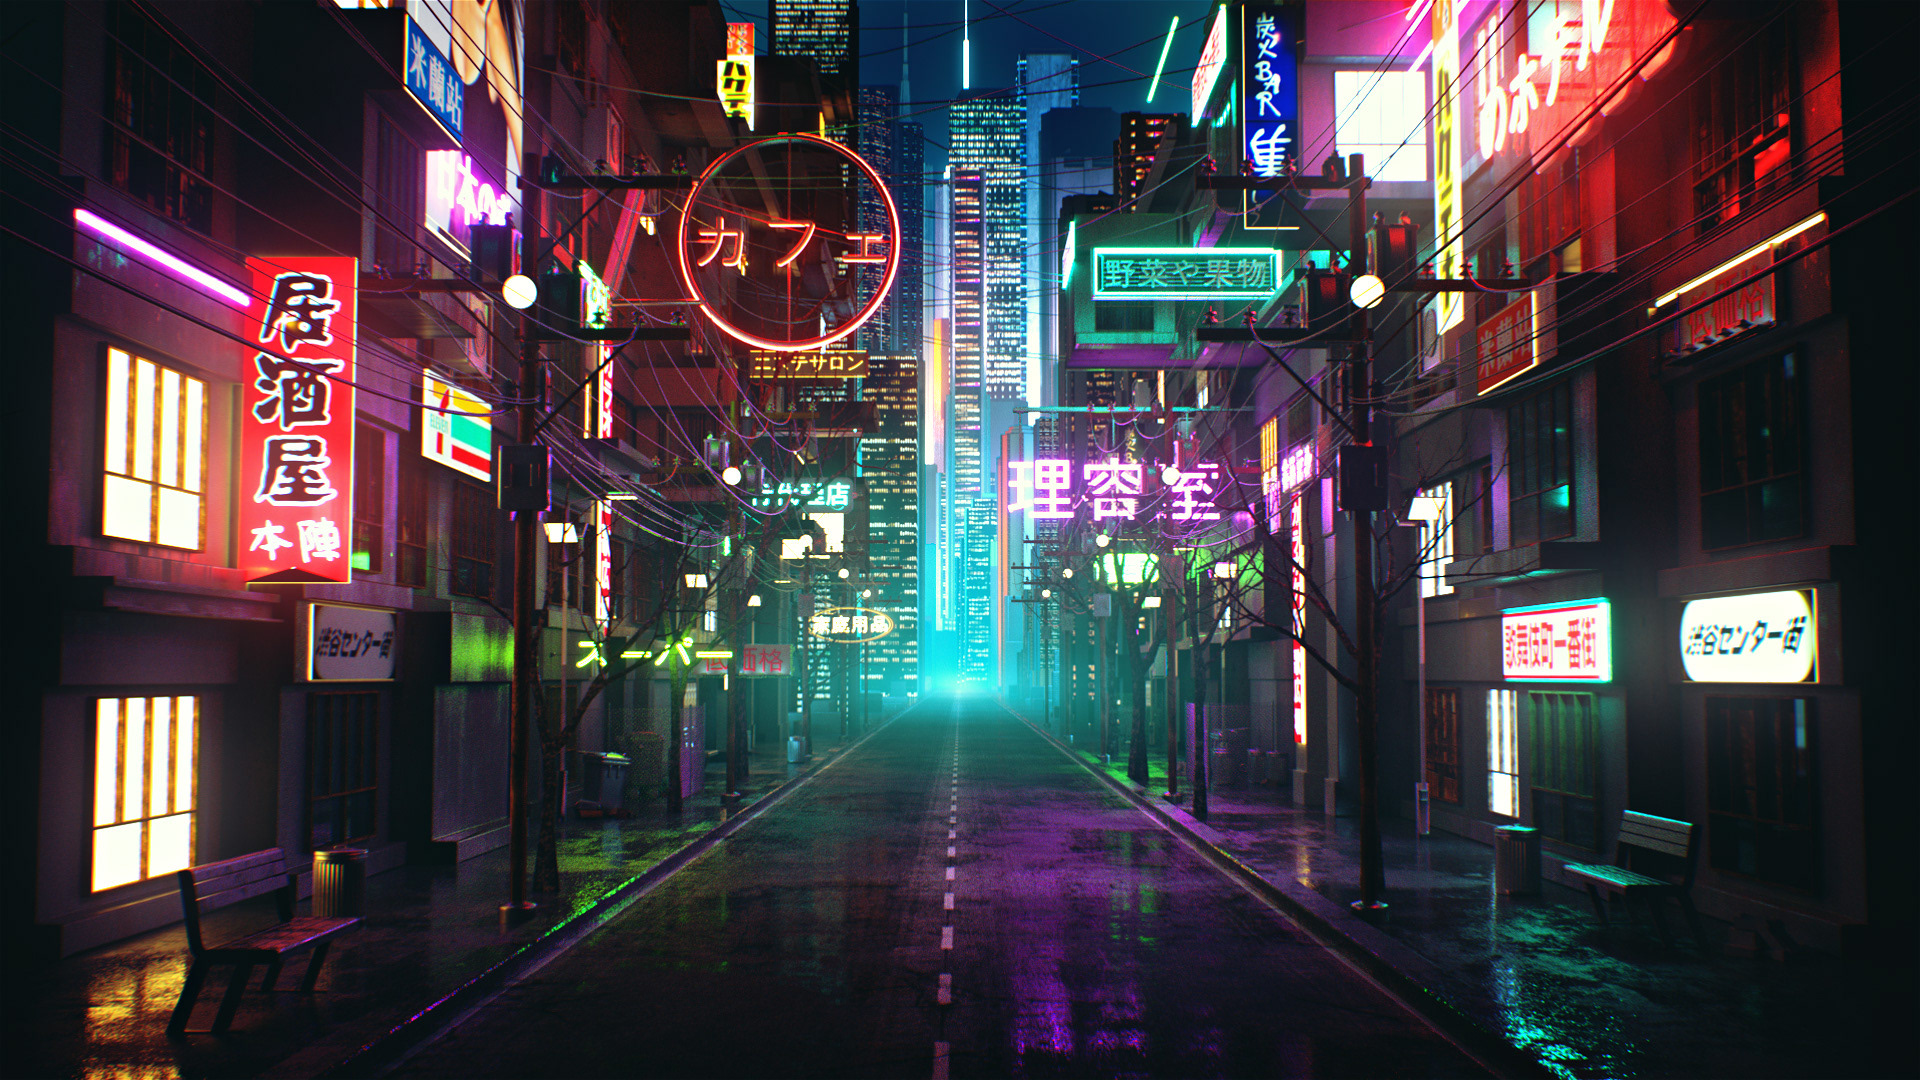 Olympics cinema 4d motion design Cyberpunk neon city CG Octane Render.